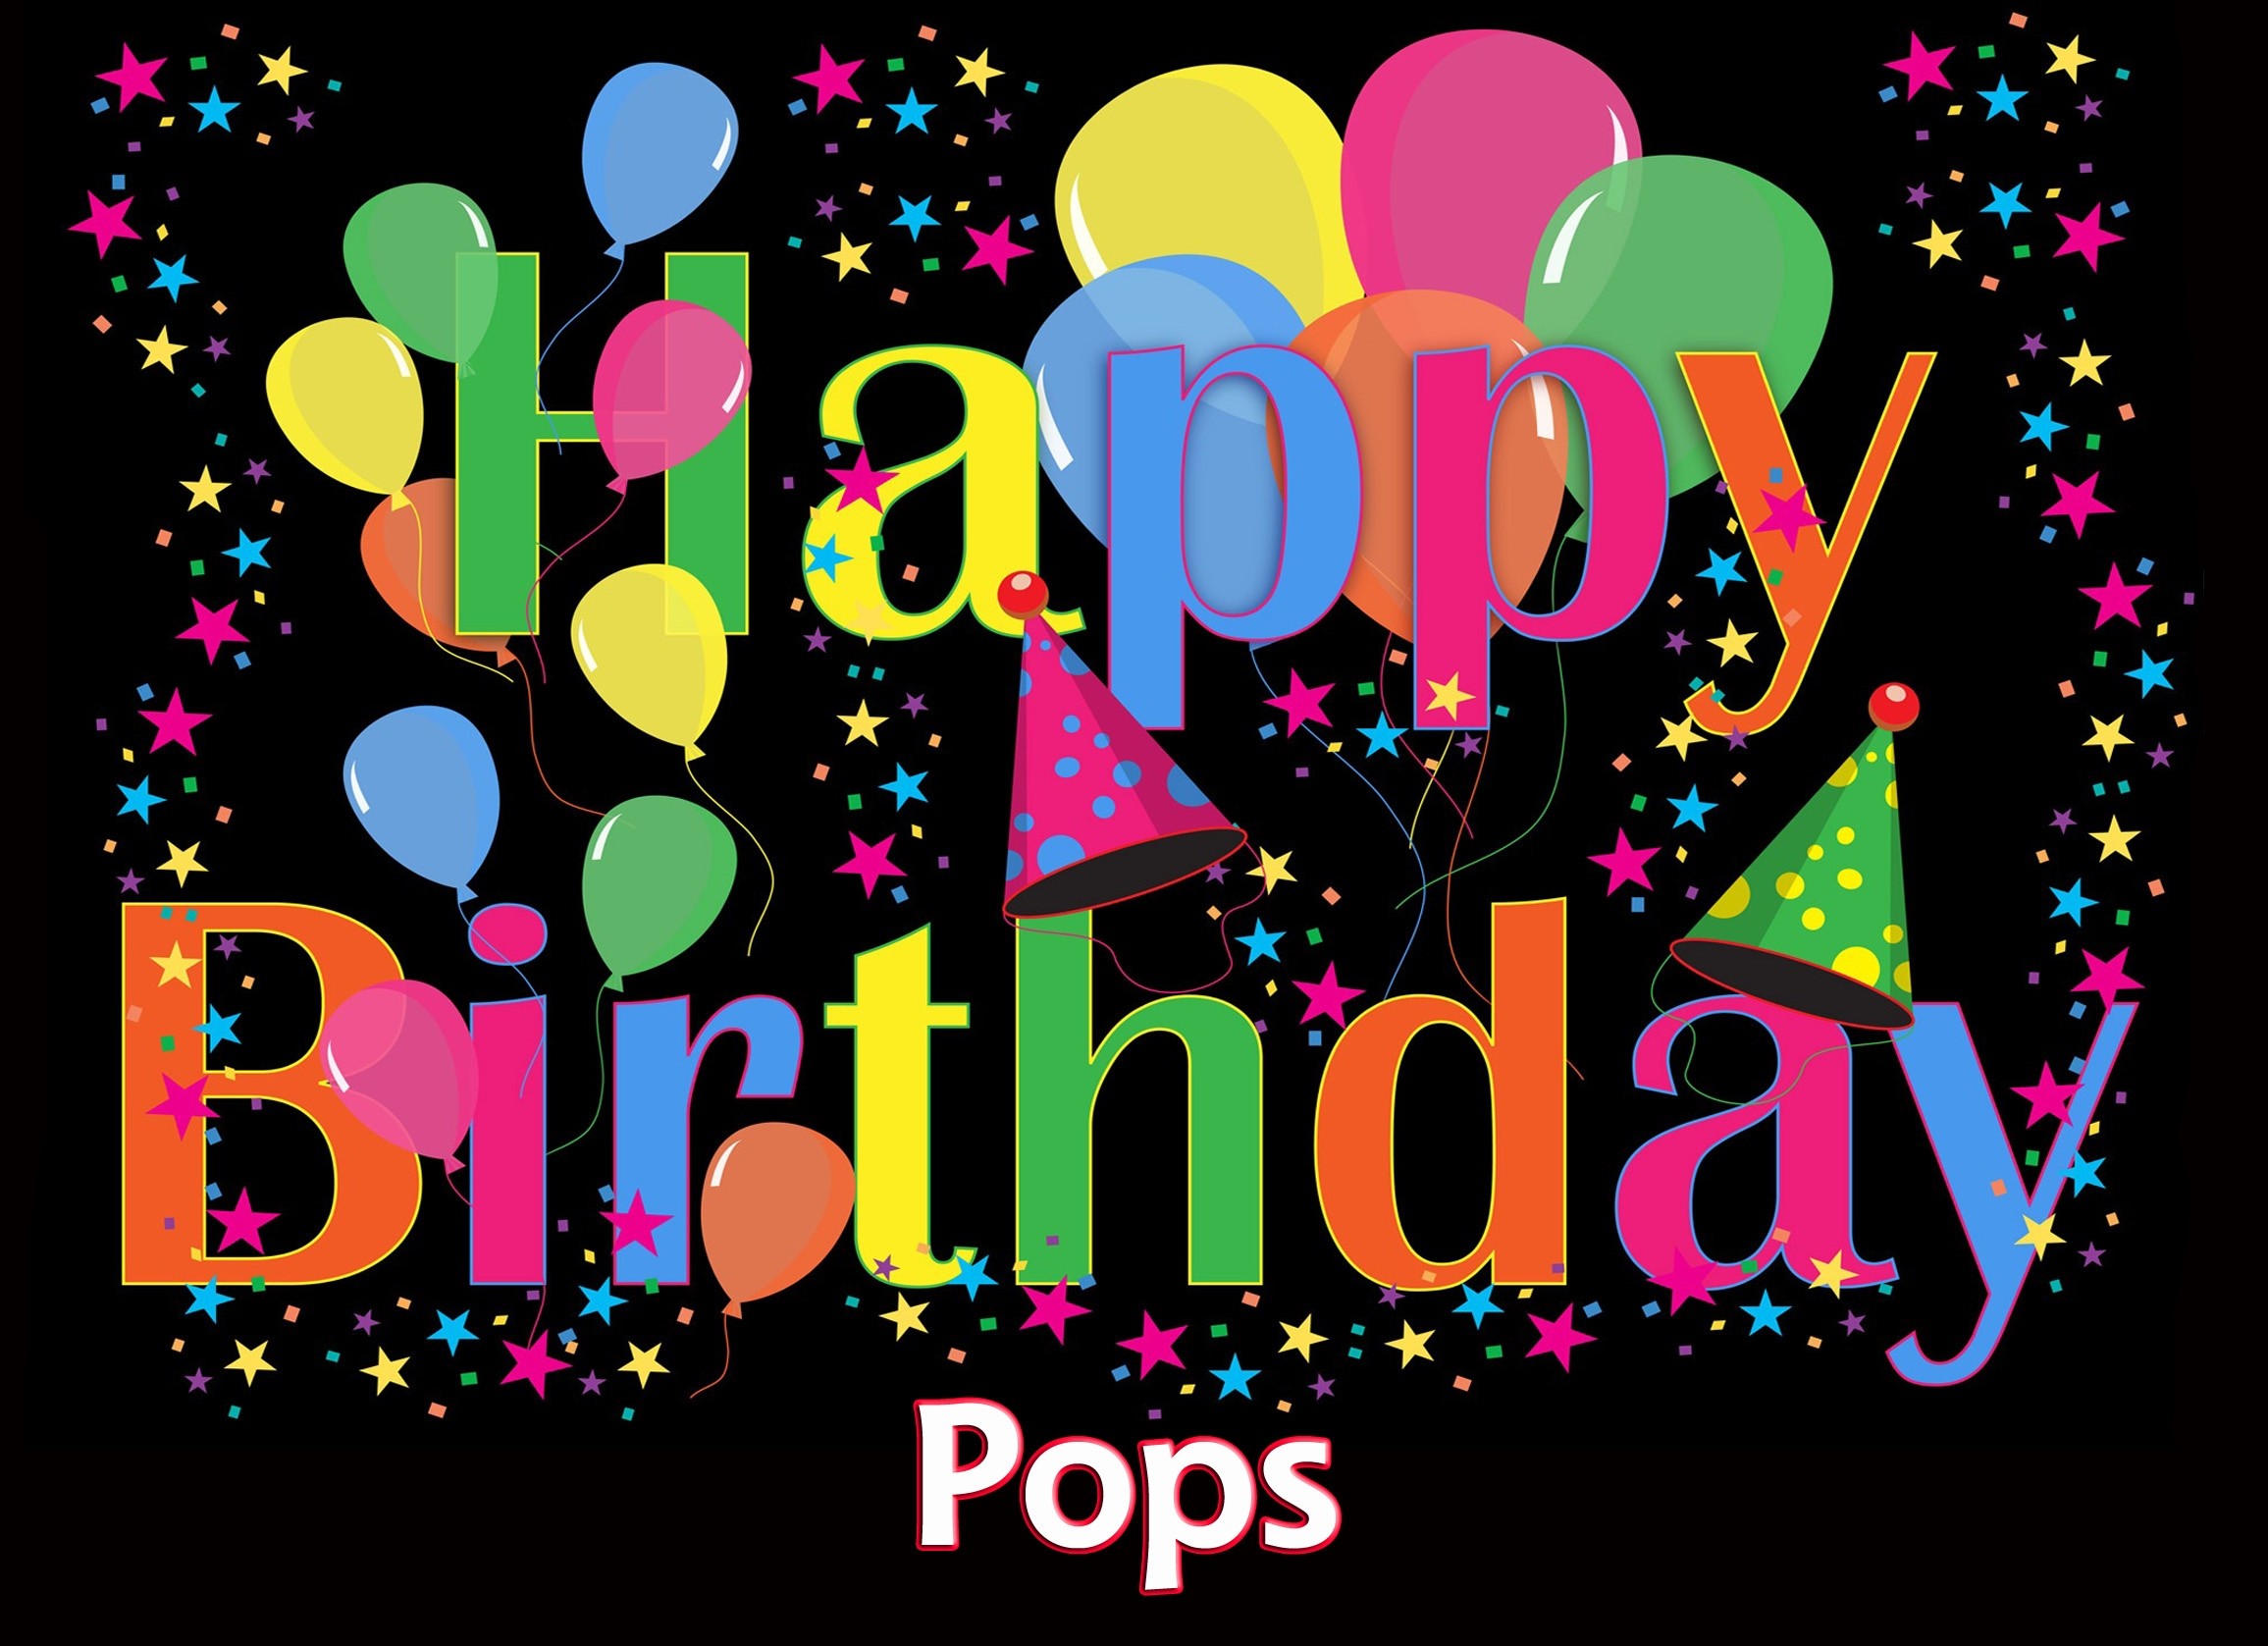 Happy Birthday 'Pops' Greeting Card